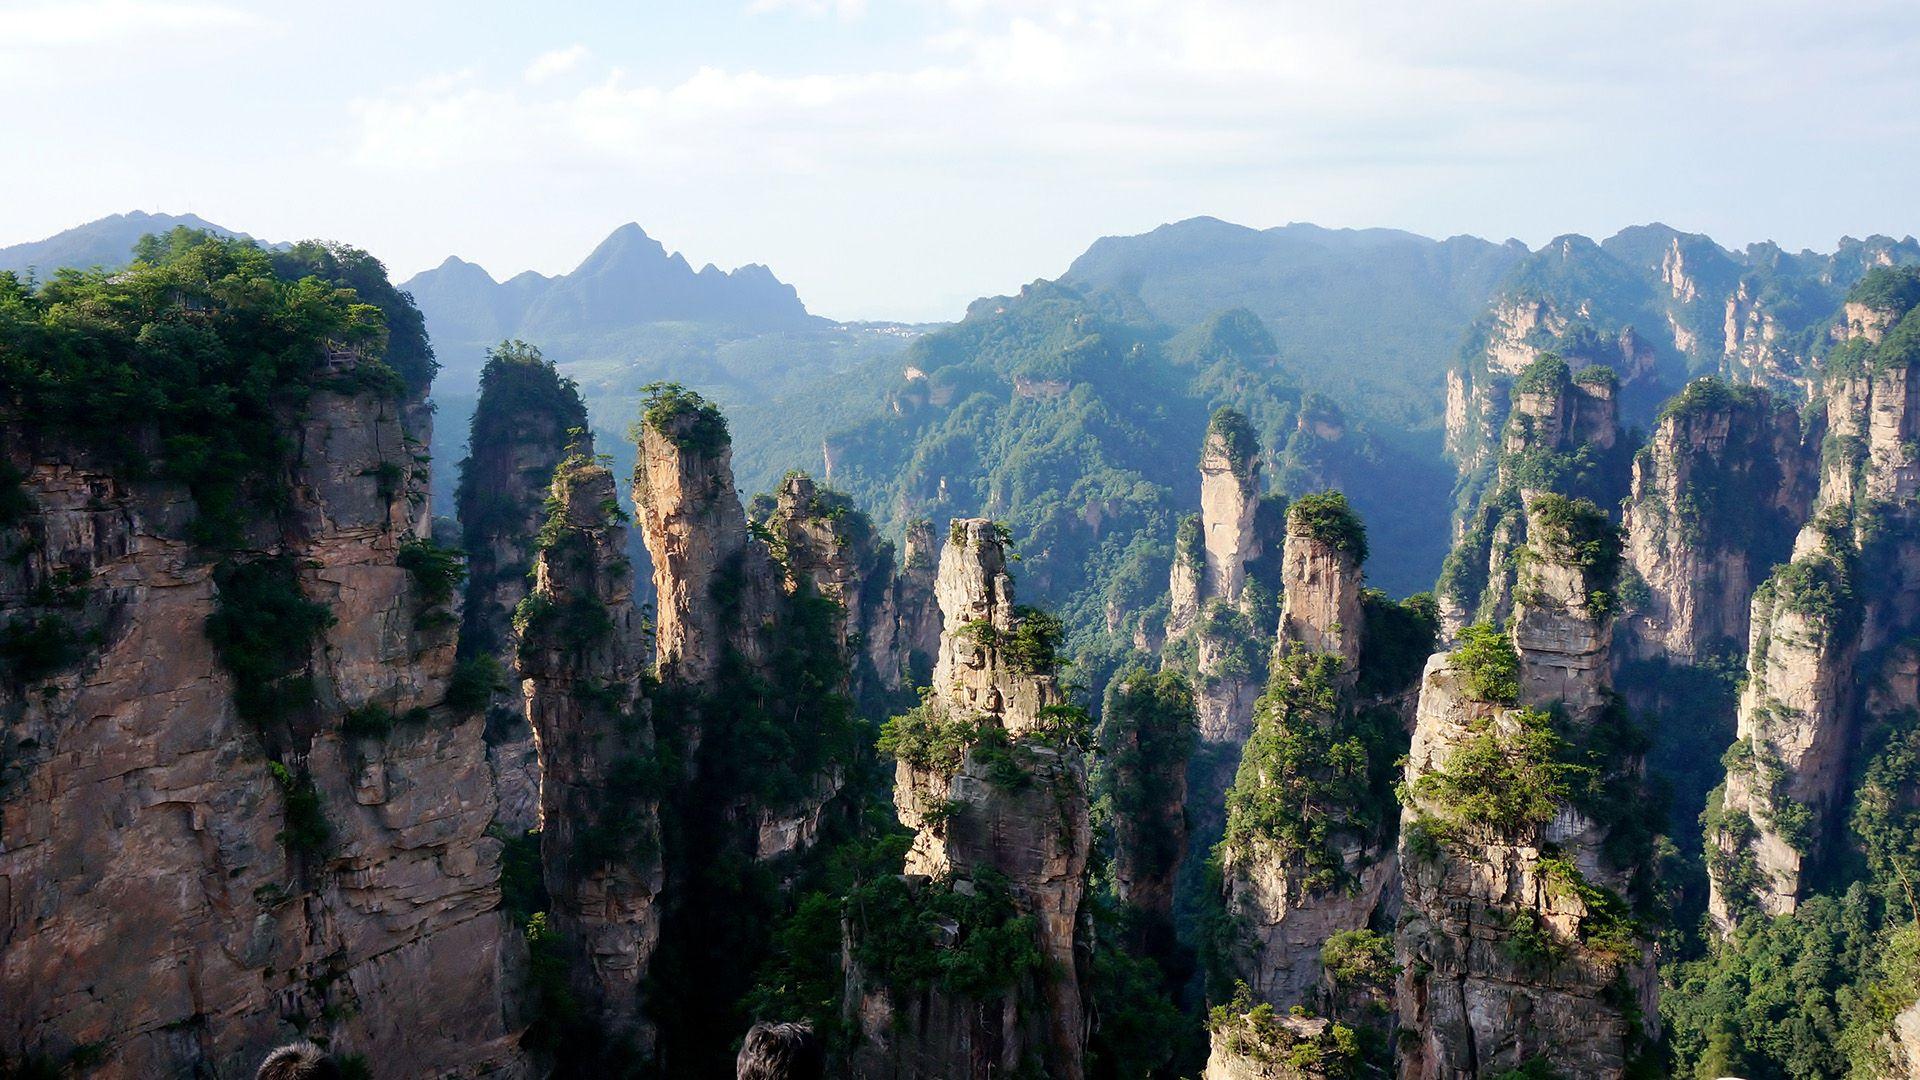 Beautiful Mountains in China Full HD (1920x1080). Beautiful